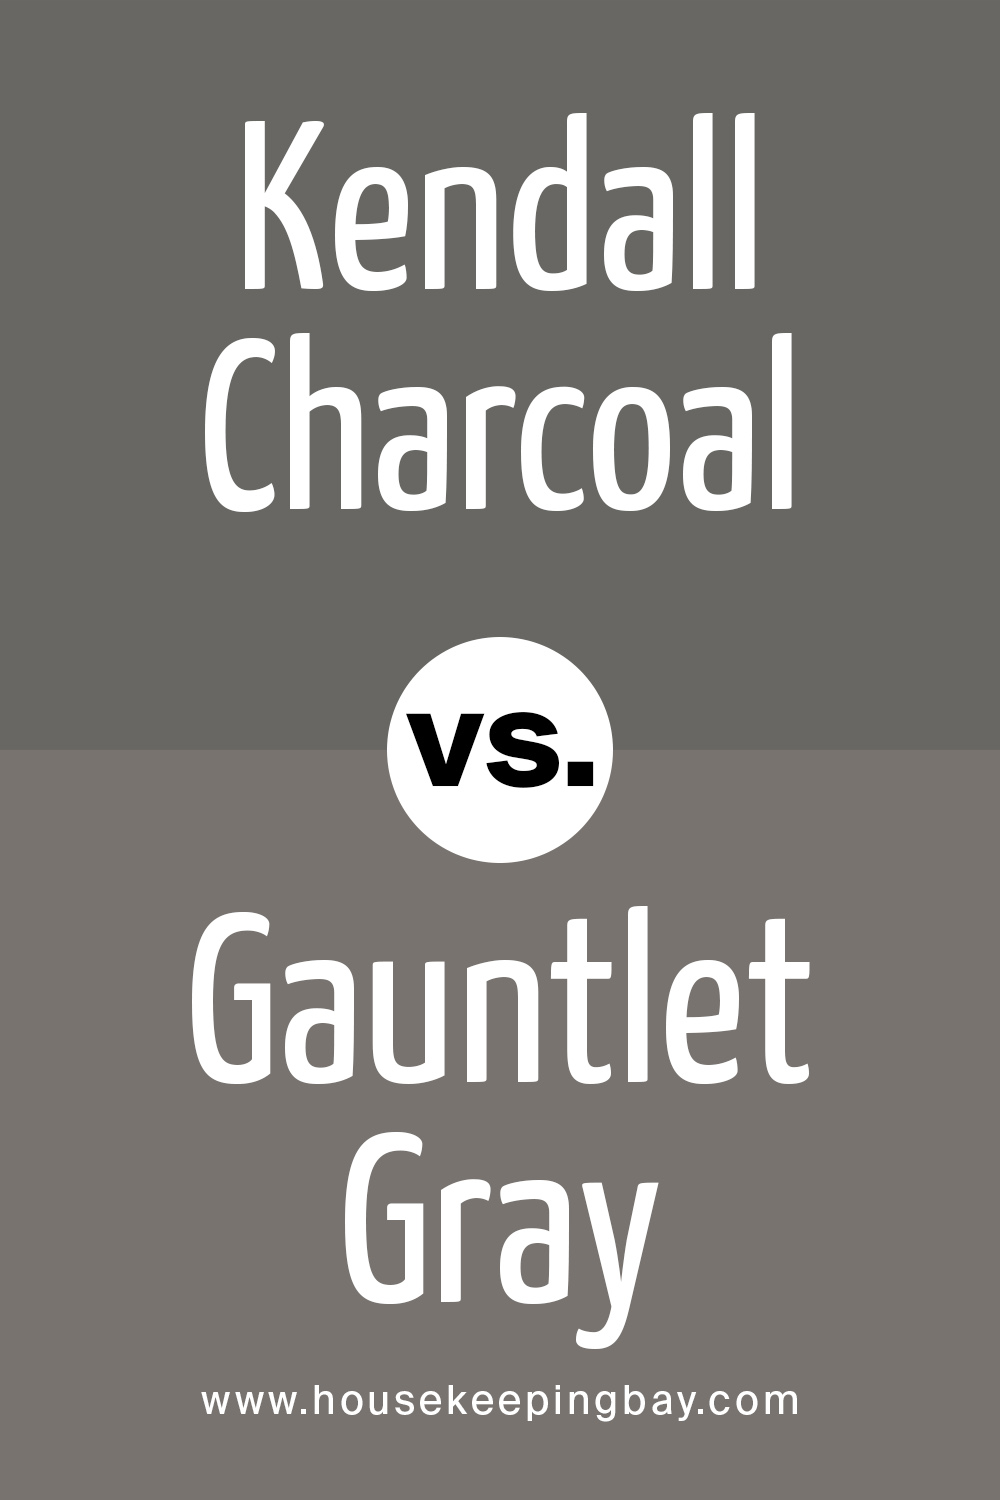 Kendall Charcoal vs Gauntlet Gray